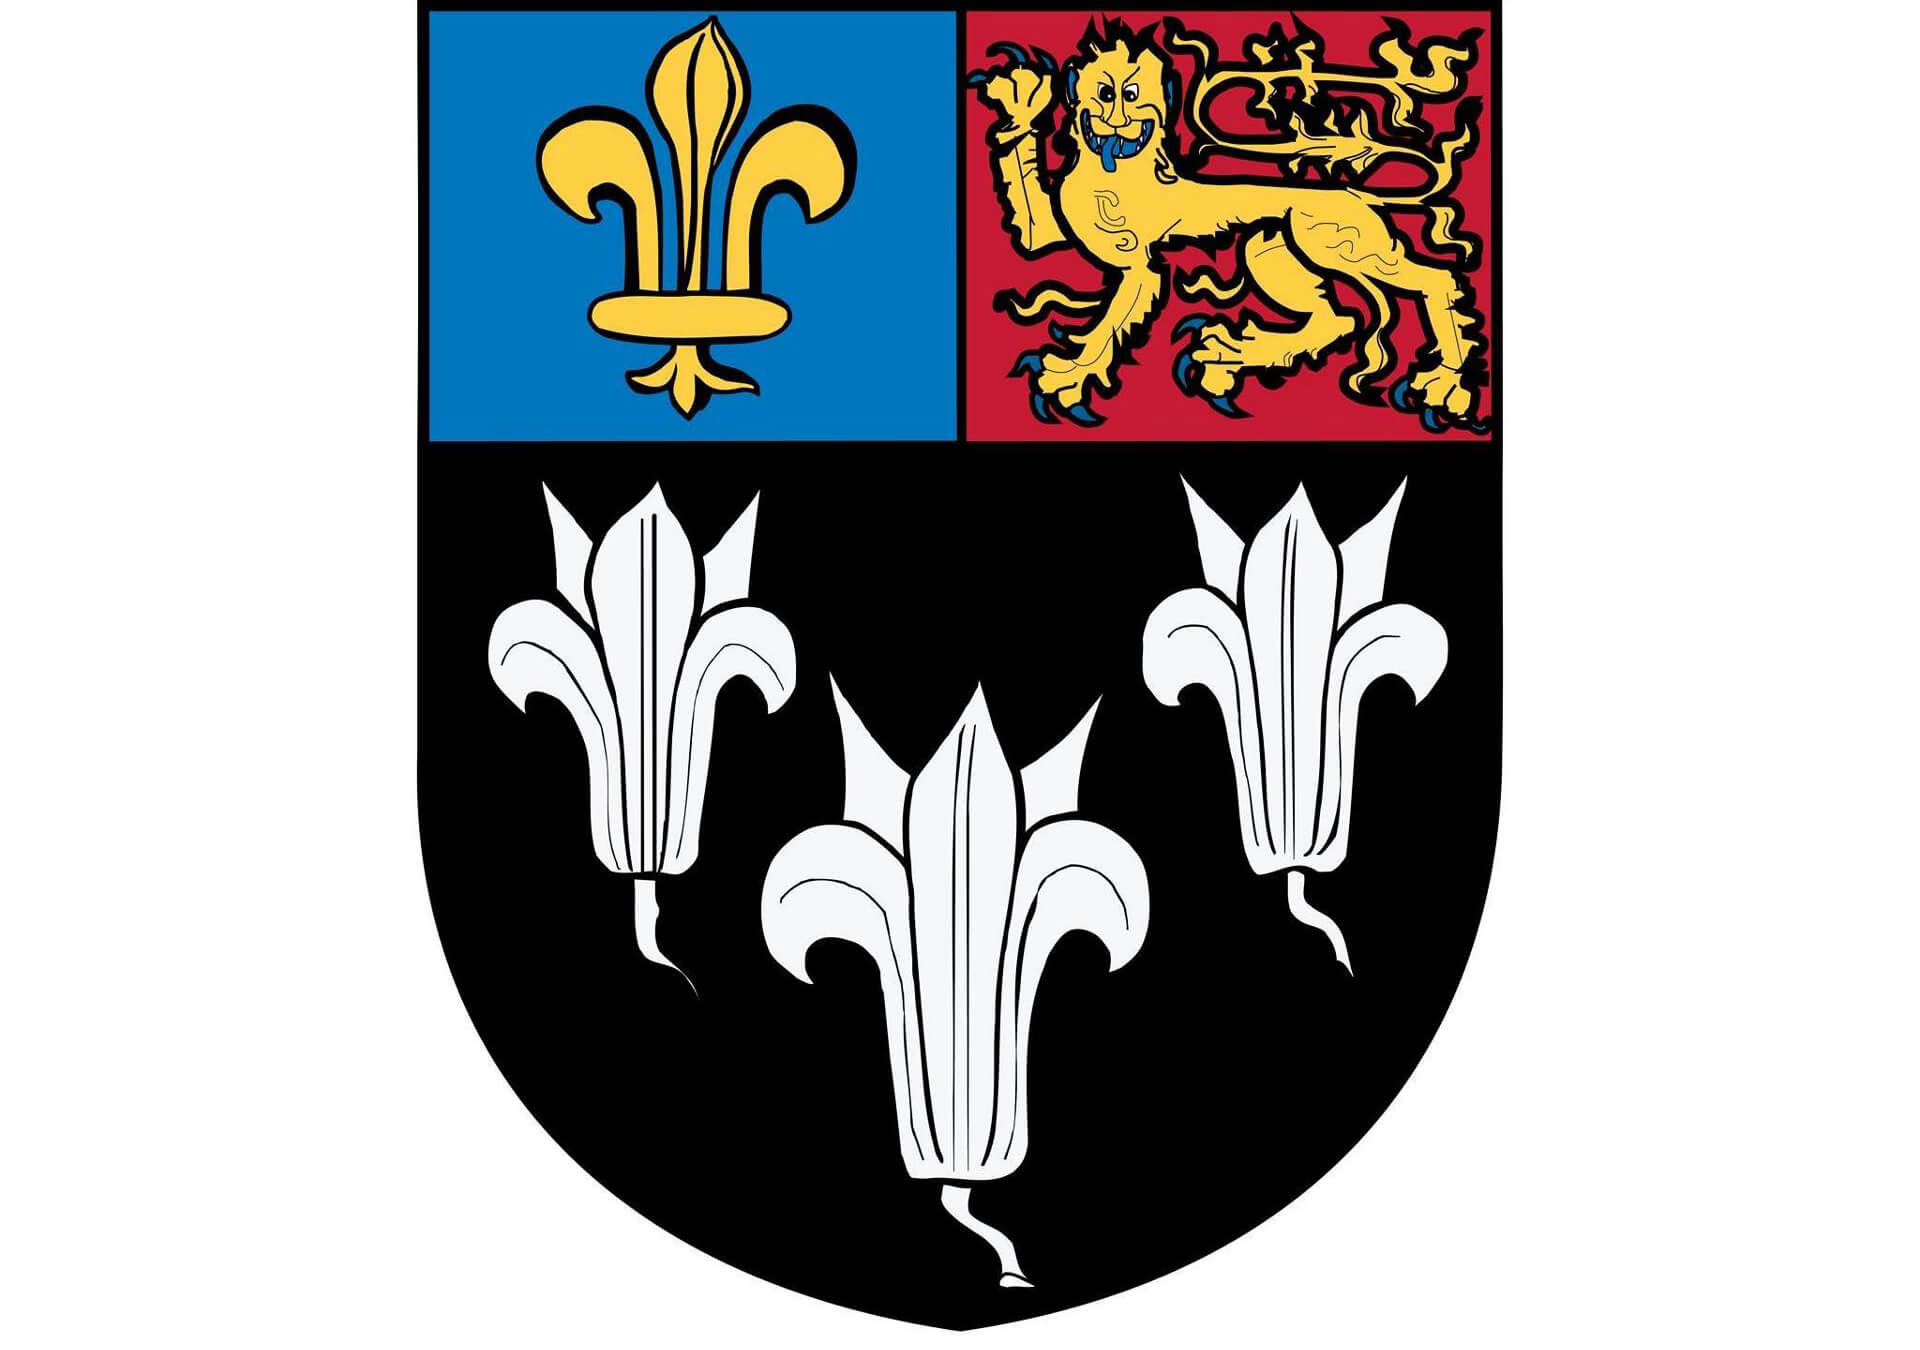 college-logo